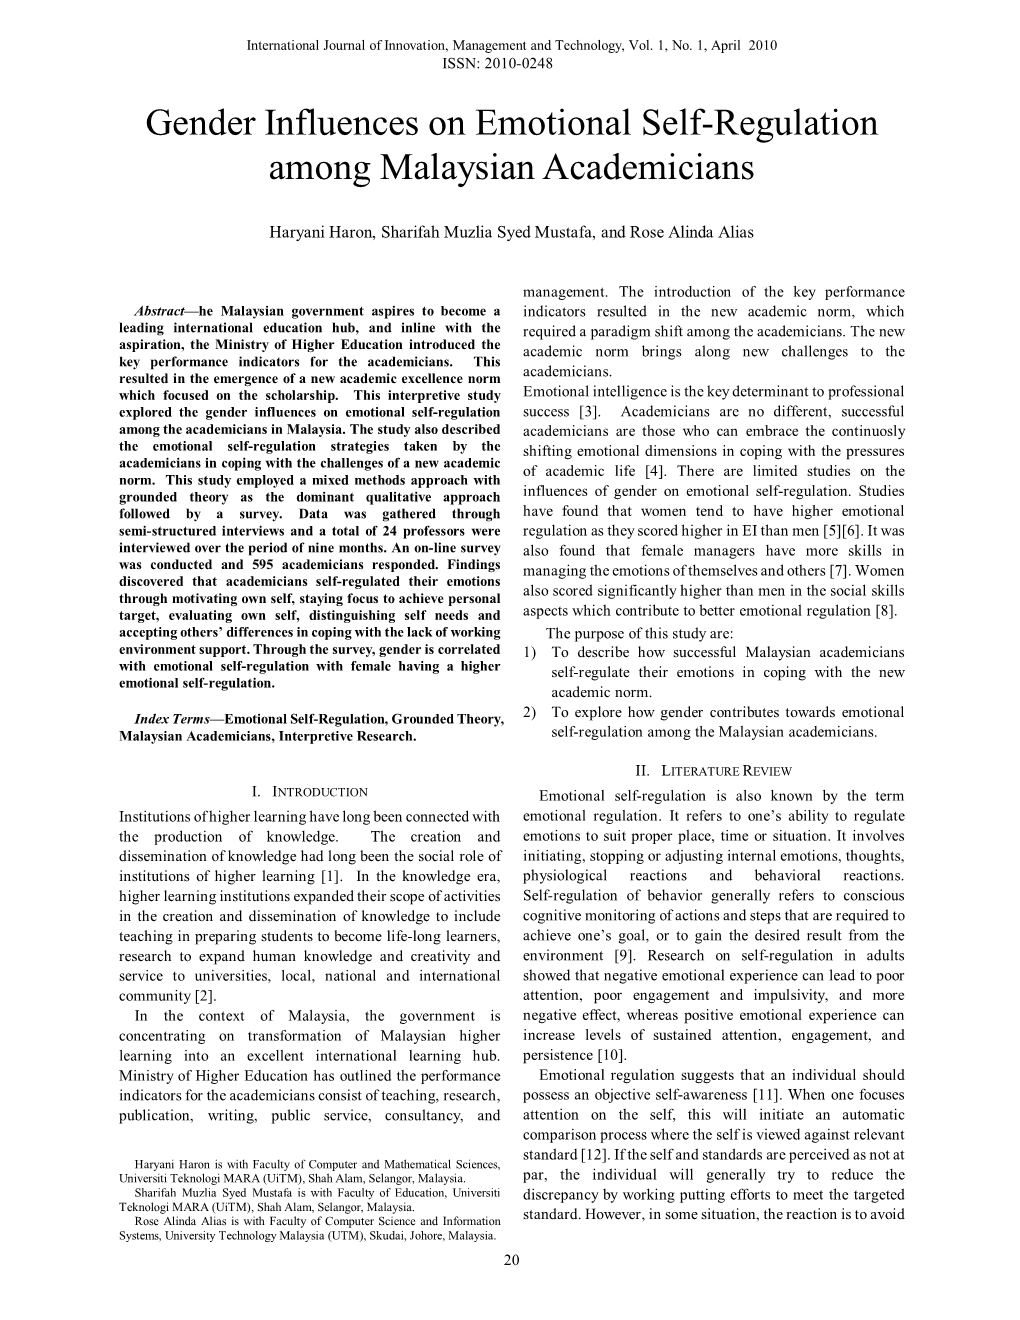 Gender Influences on Emotional Self-Regulation Among Malaysian Academicians